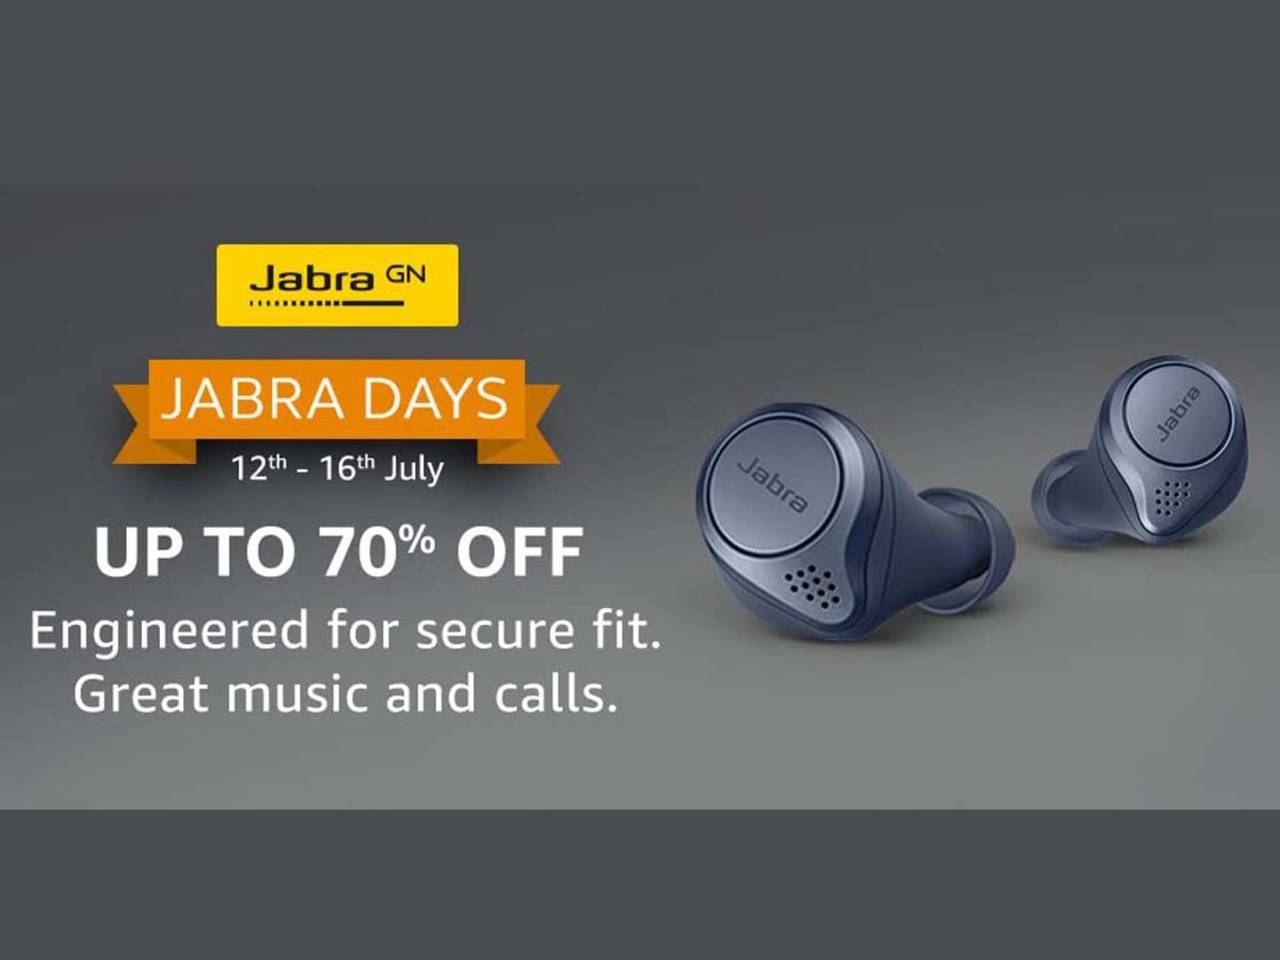 Charles Keasing opfindelse Lægge sammen Amazon sale offer: Get up to 70% off on Jabra Bluetooth headphones and  truly wireless earbuds | - Times of India